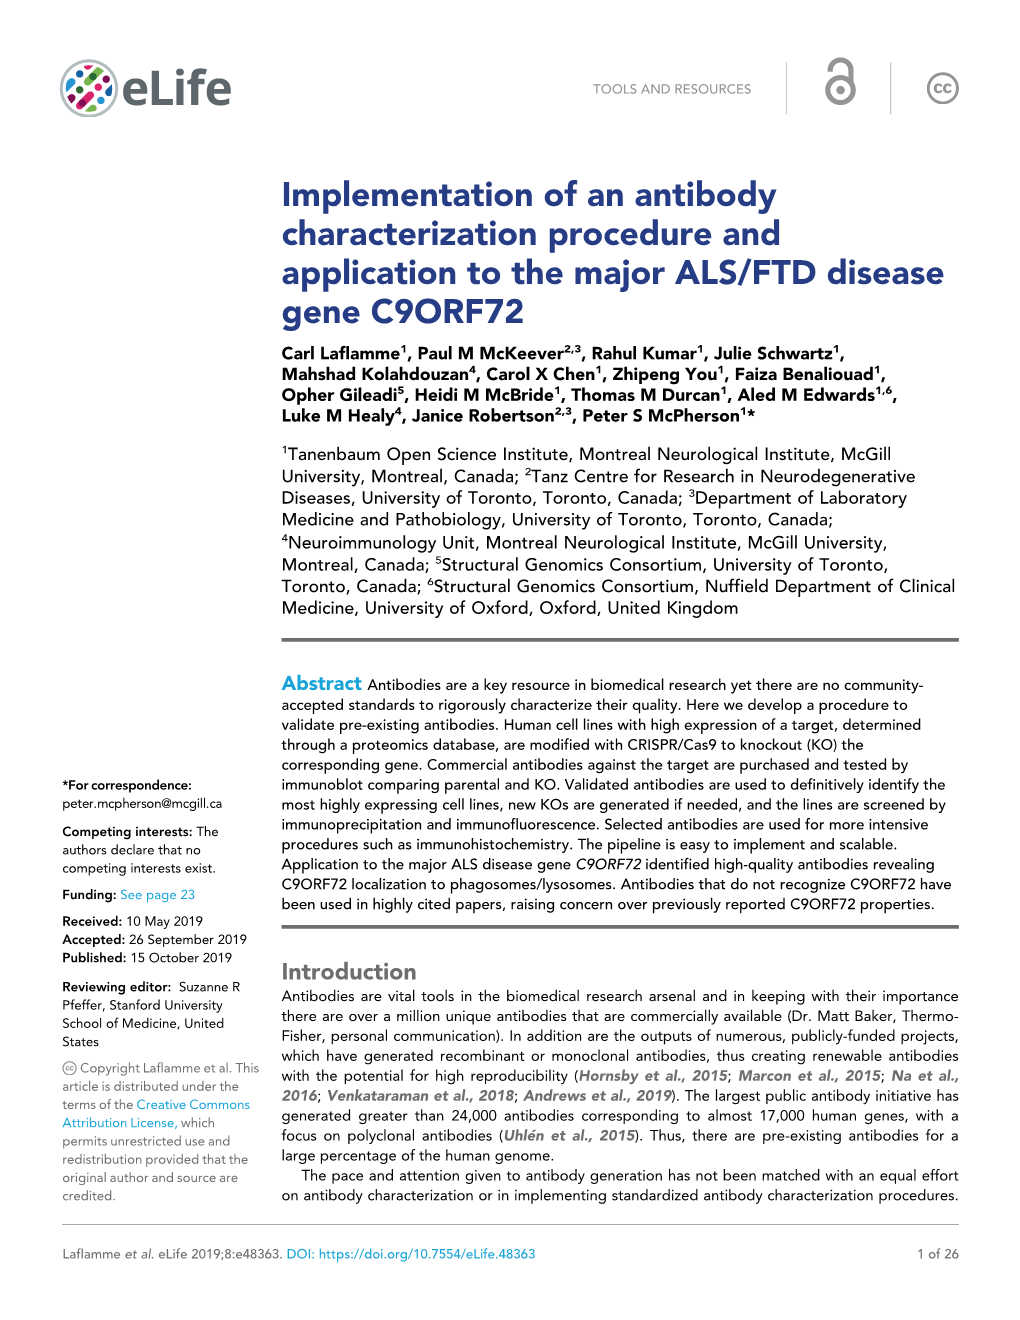 Implementation of an Antibody Characterization Procedure